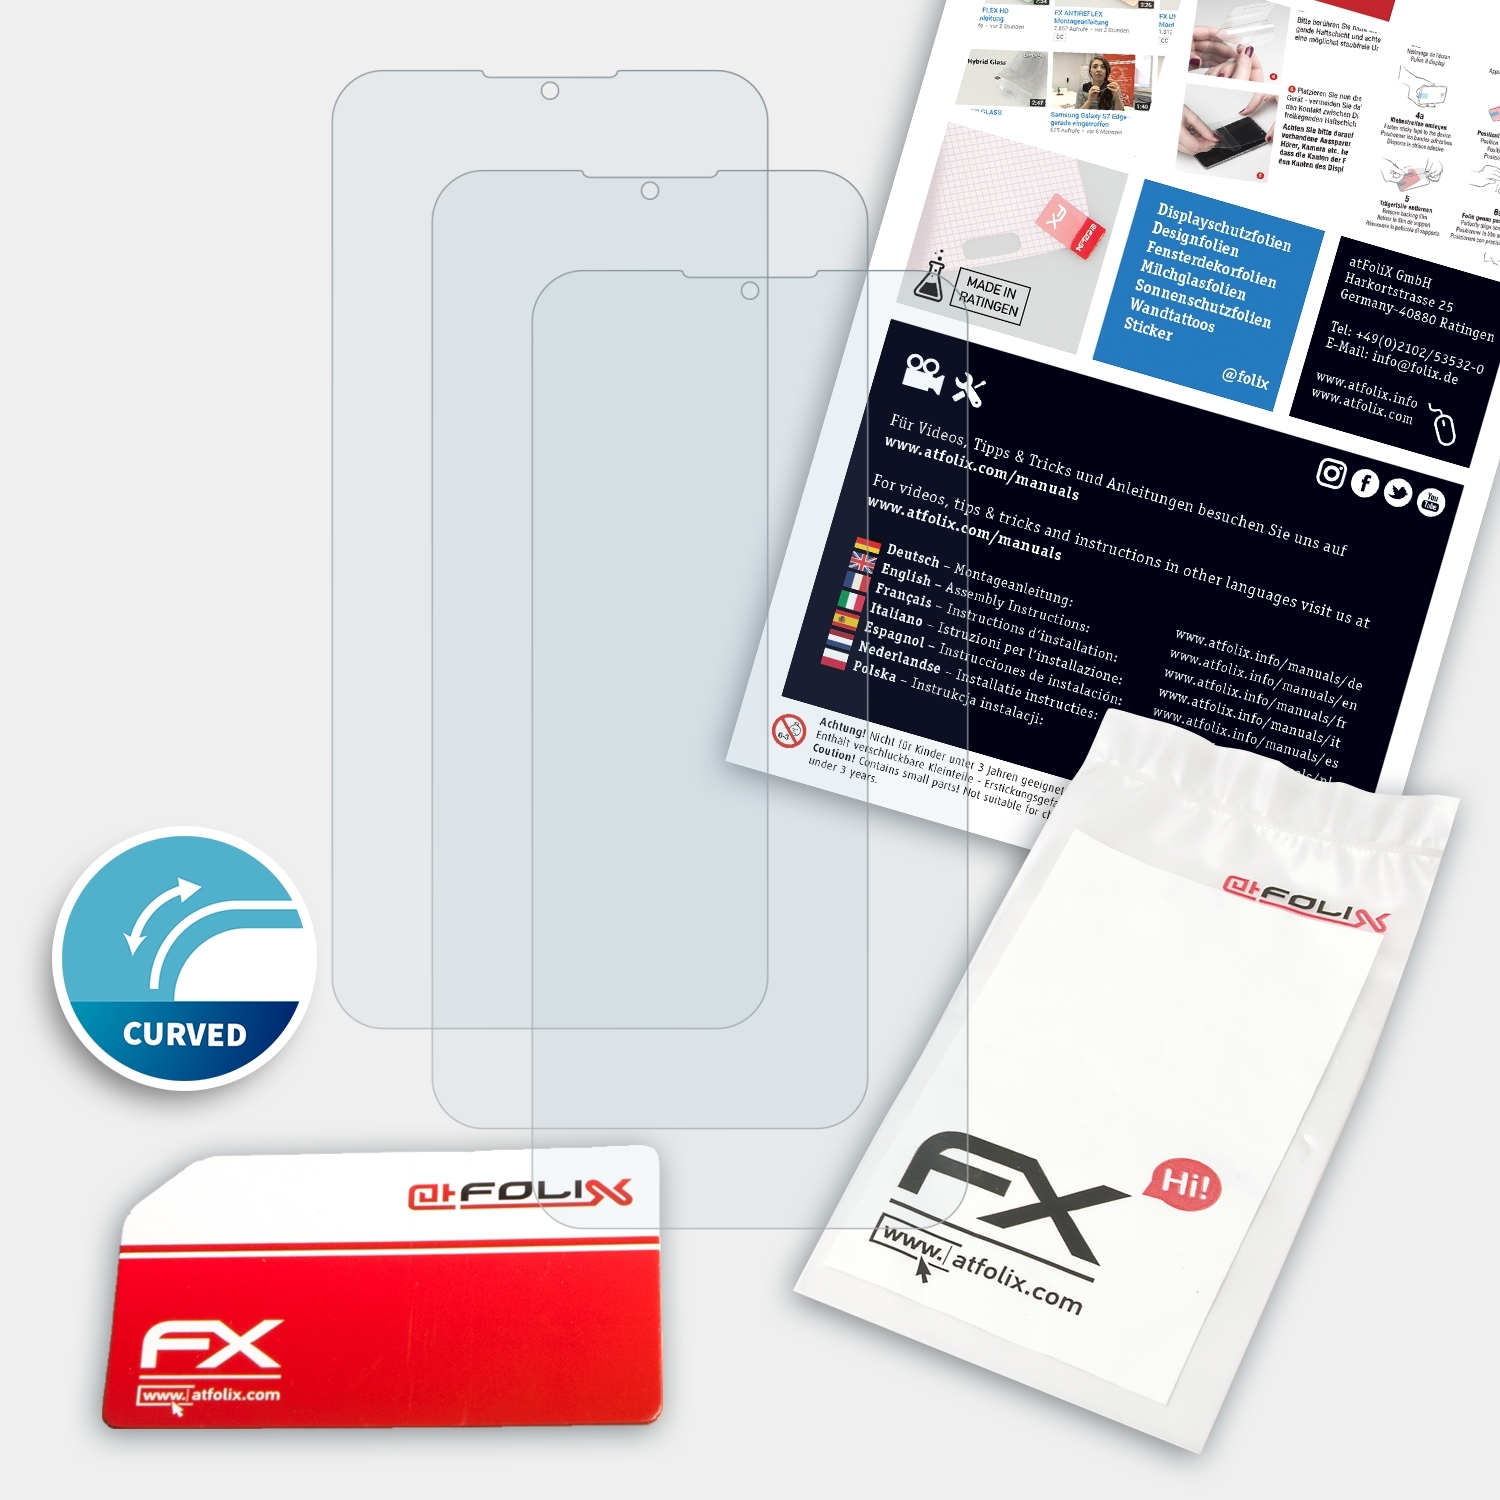 ATFOLIX 3x FX-ActiFleX Displayschutz(für Realme C25)